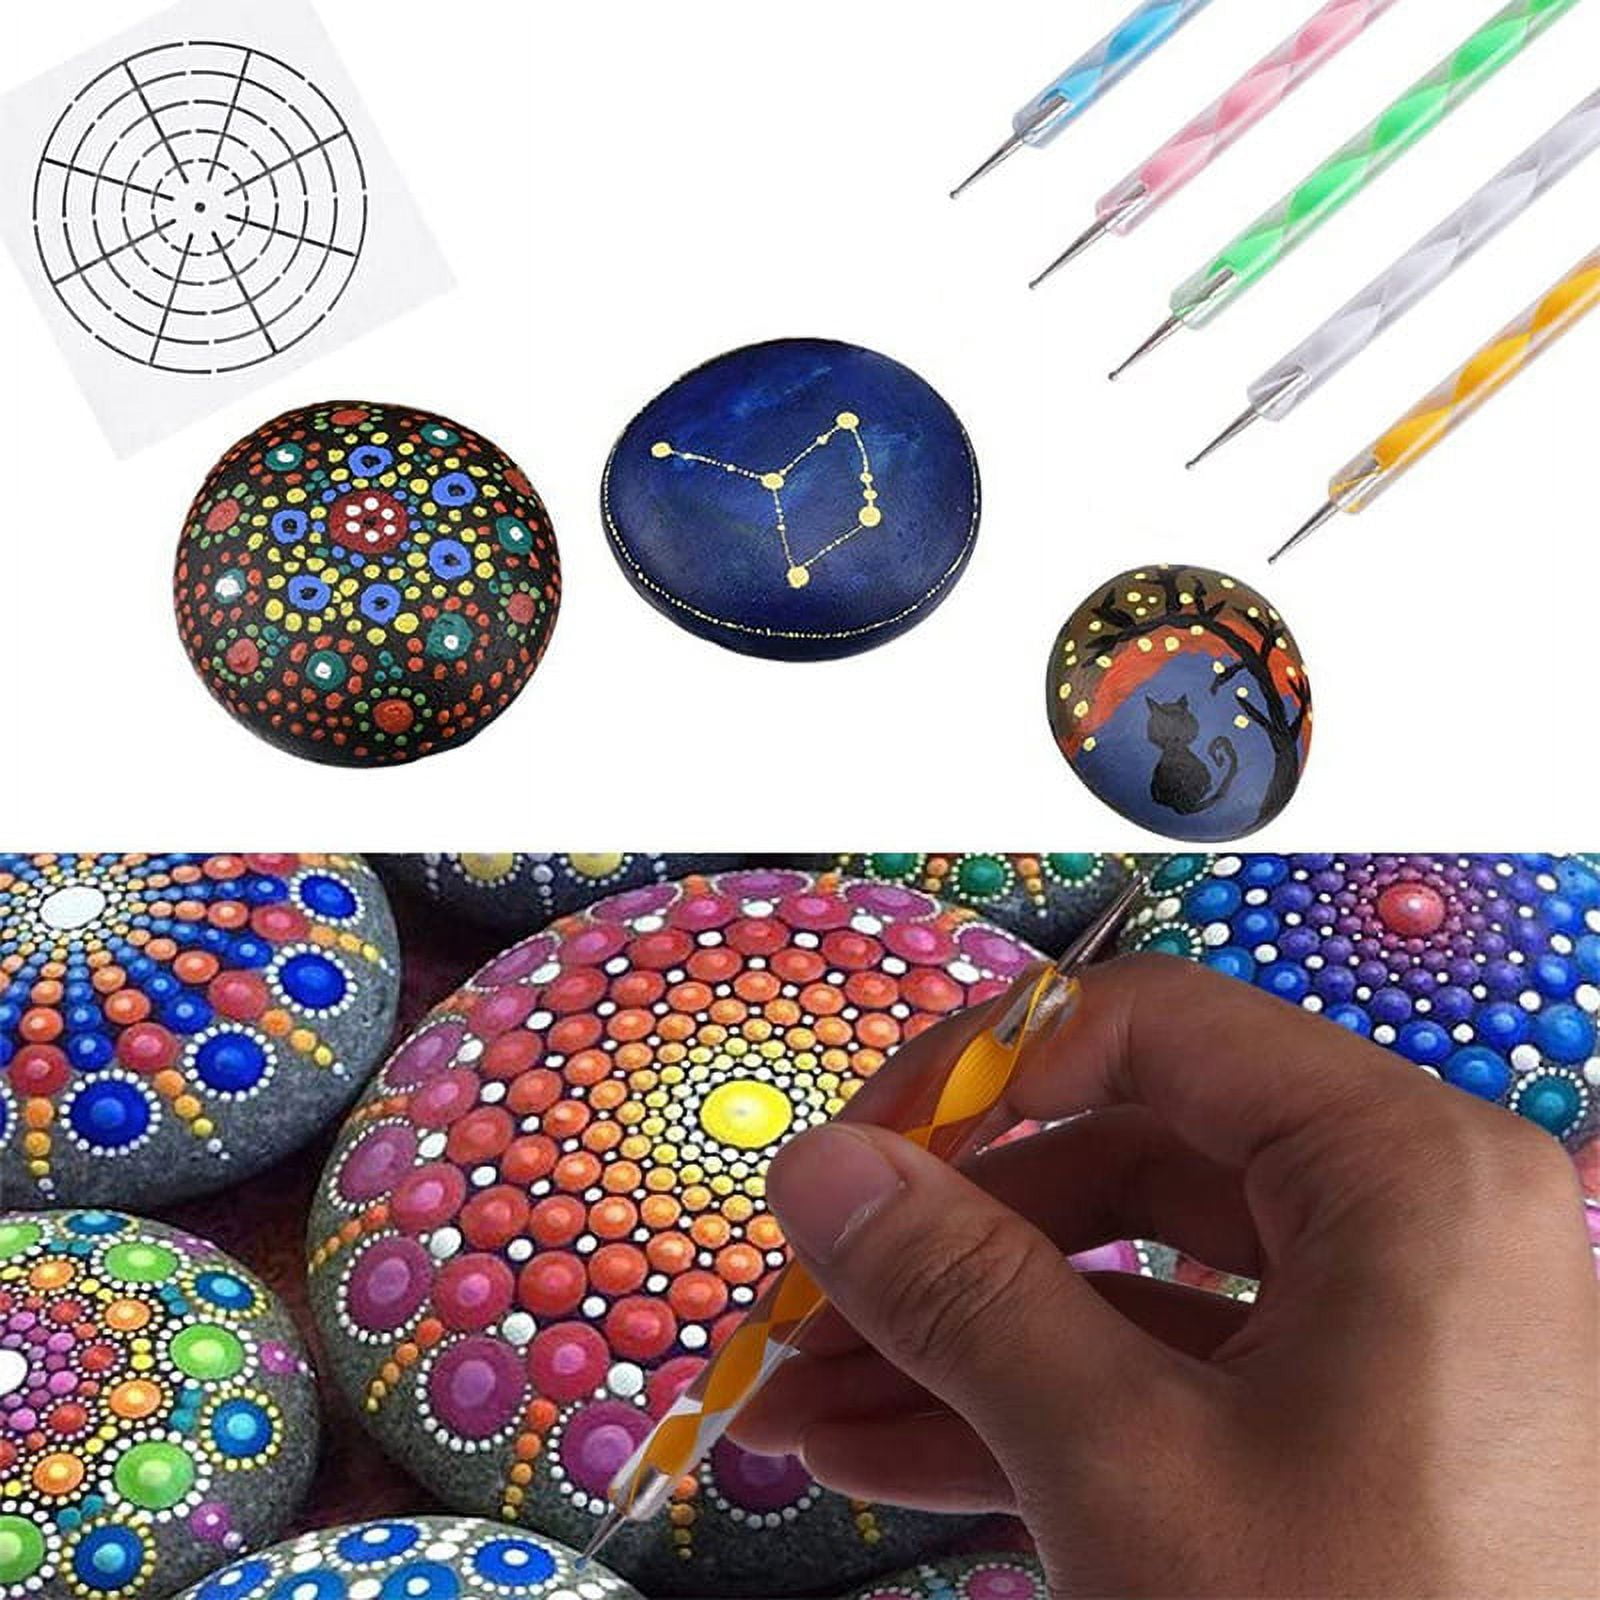 19pcs Mandala Dotting Tools Set with A Zipper Storage Bag for Painting Rocks, ABenkle Mandala Stencil Ball Stylus Paint Tray Set